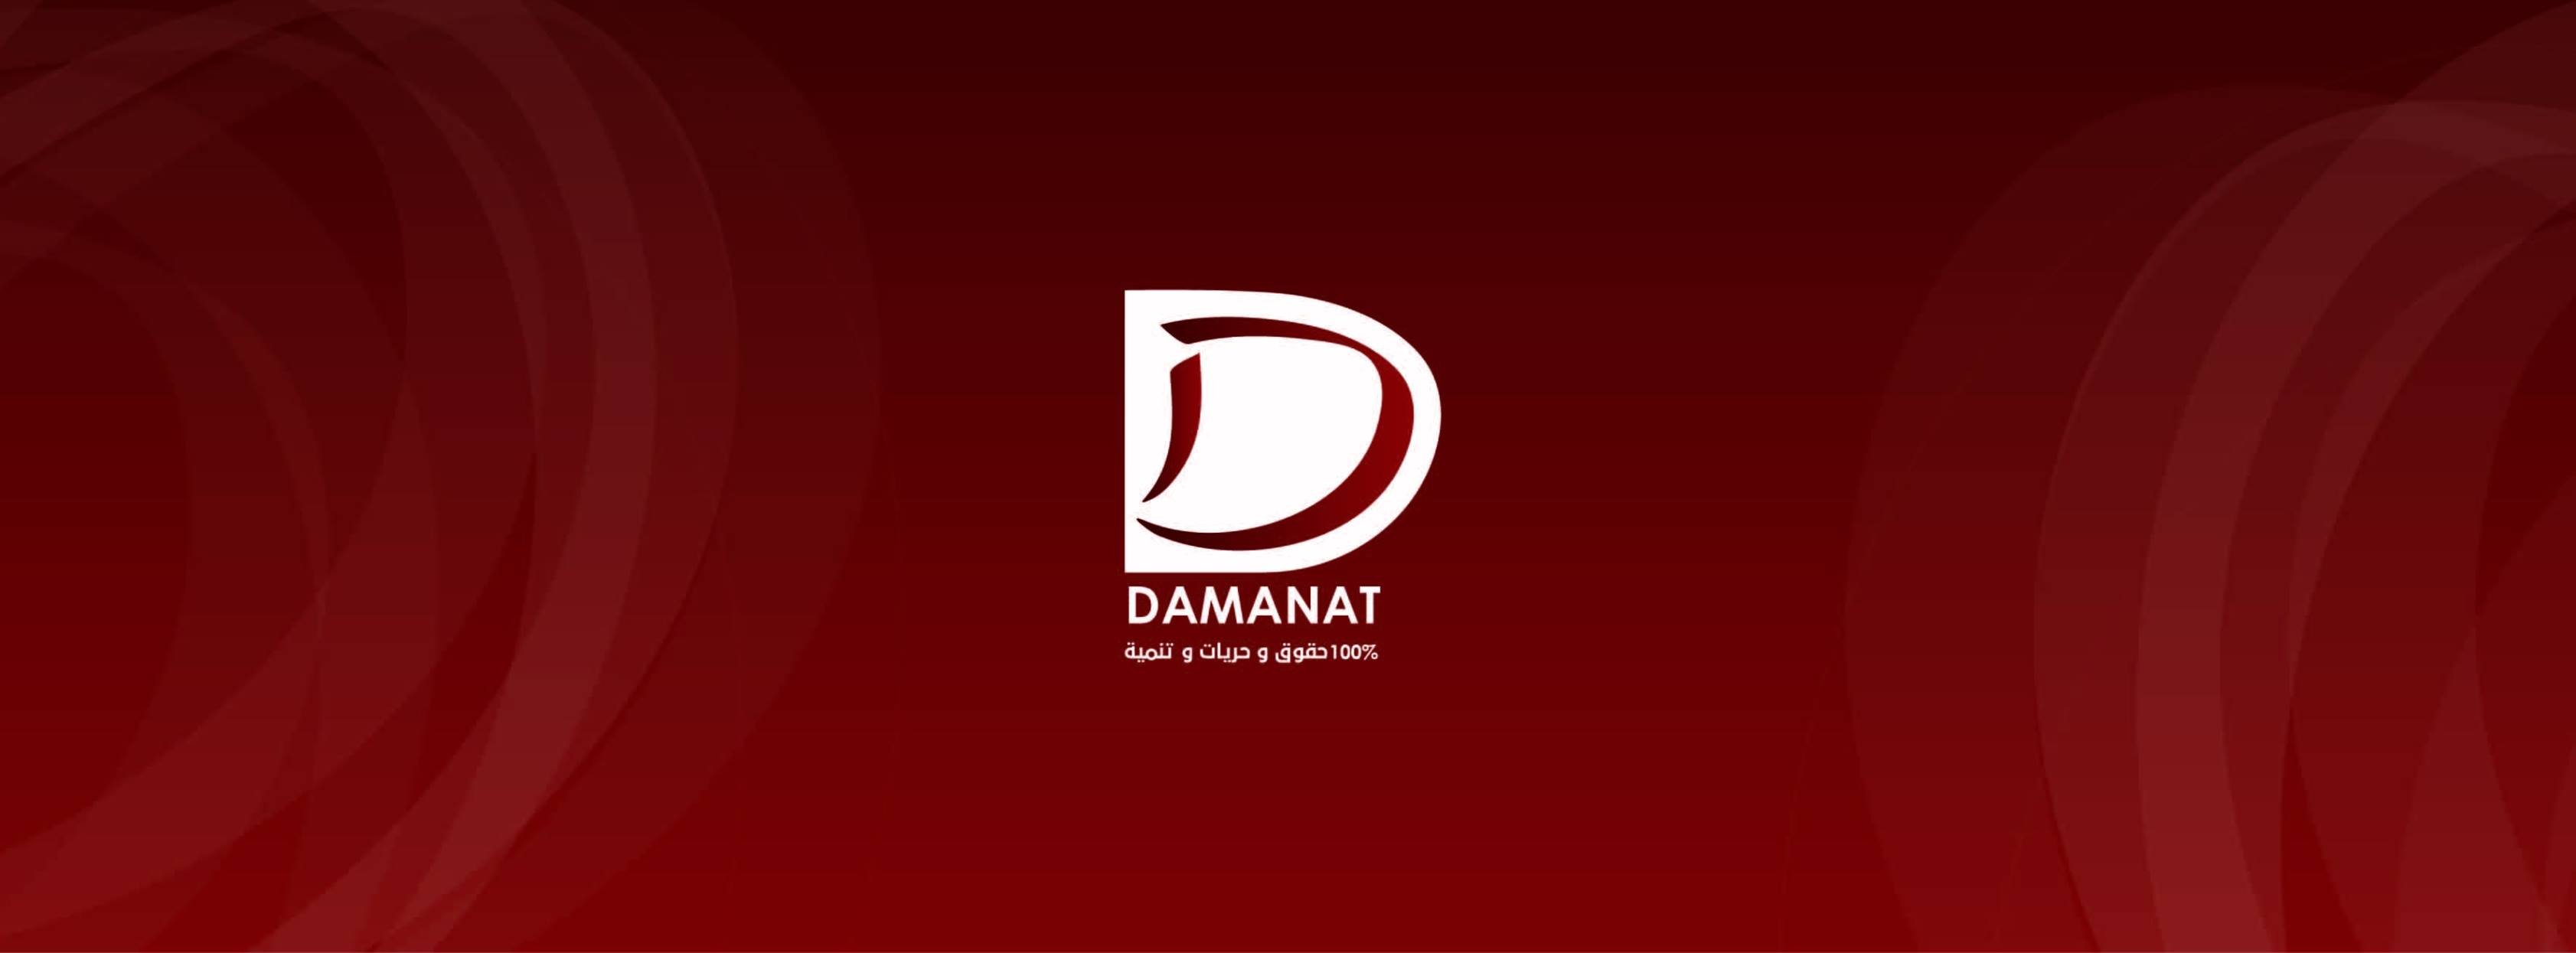 Damanat